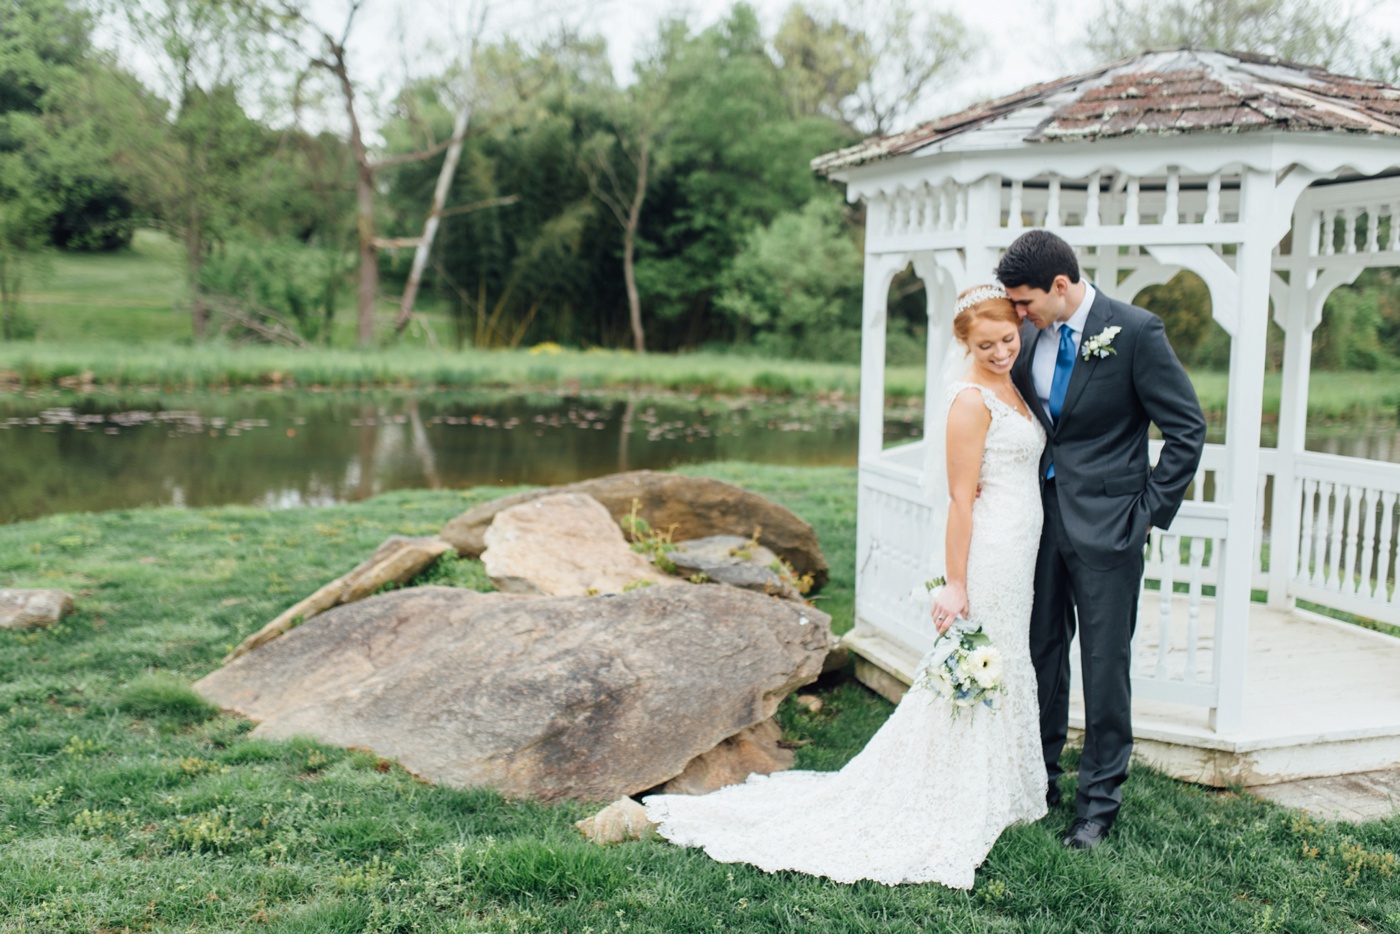 Mason + Allie - Mountain Branch Golf Club Ceremony - Joppa Maryland Wedding Photographer - Alison Dunn Photography photo